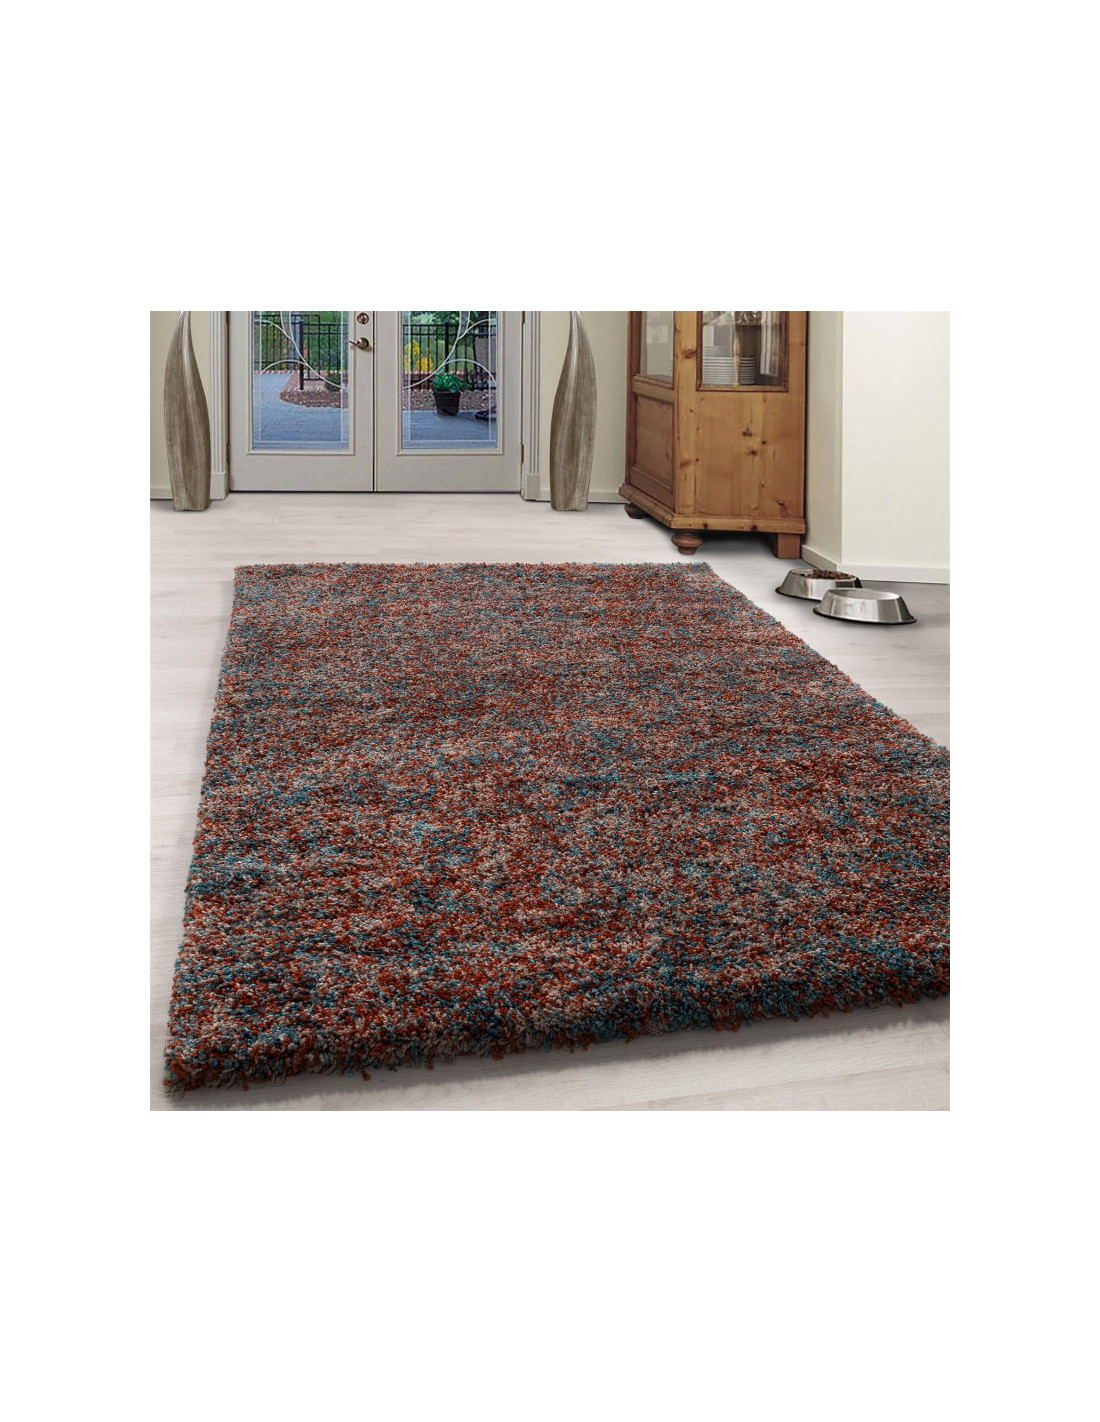 Living room shaggy carpet high quality long pile deep pile terra blue beige mottled